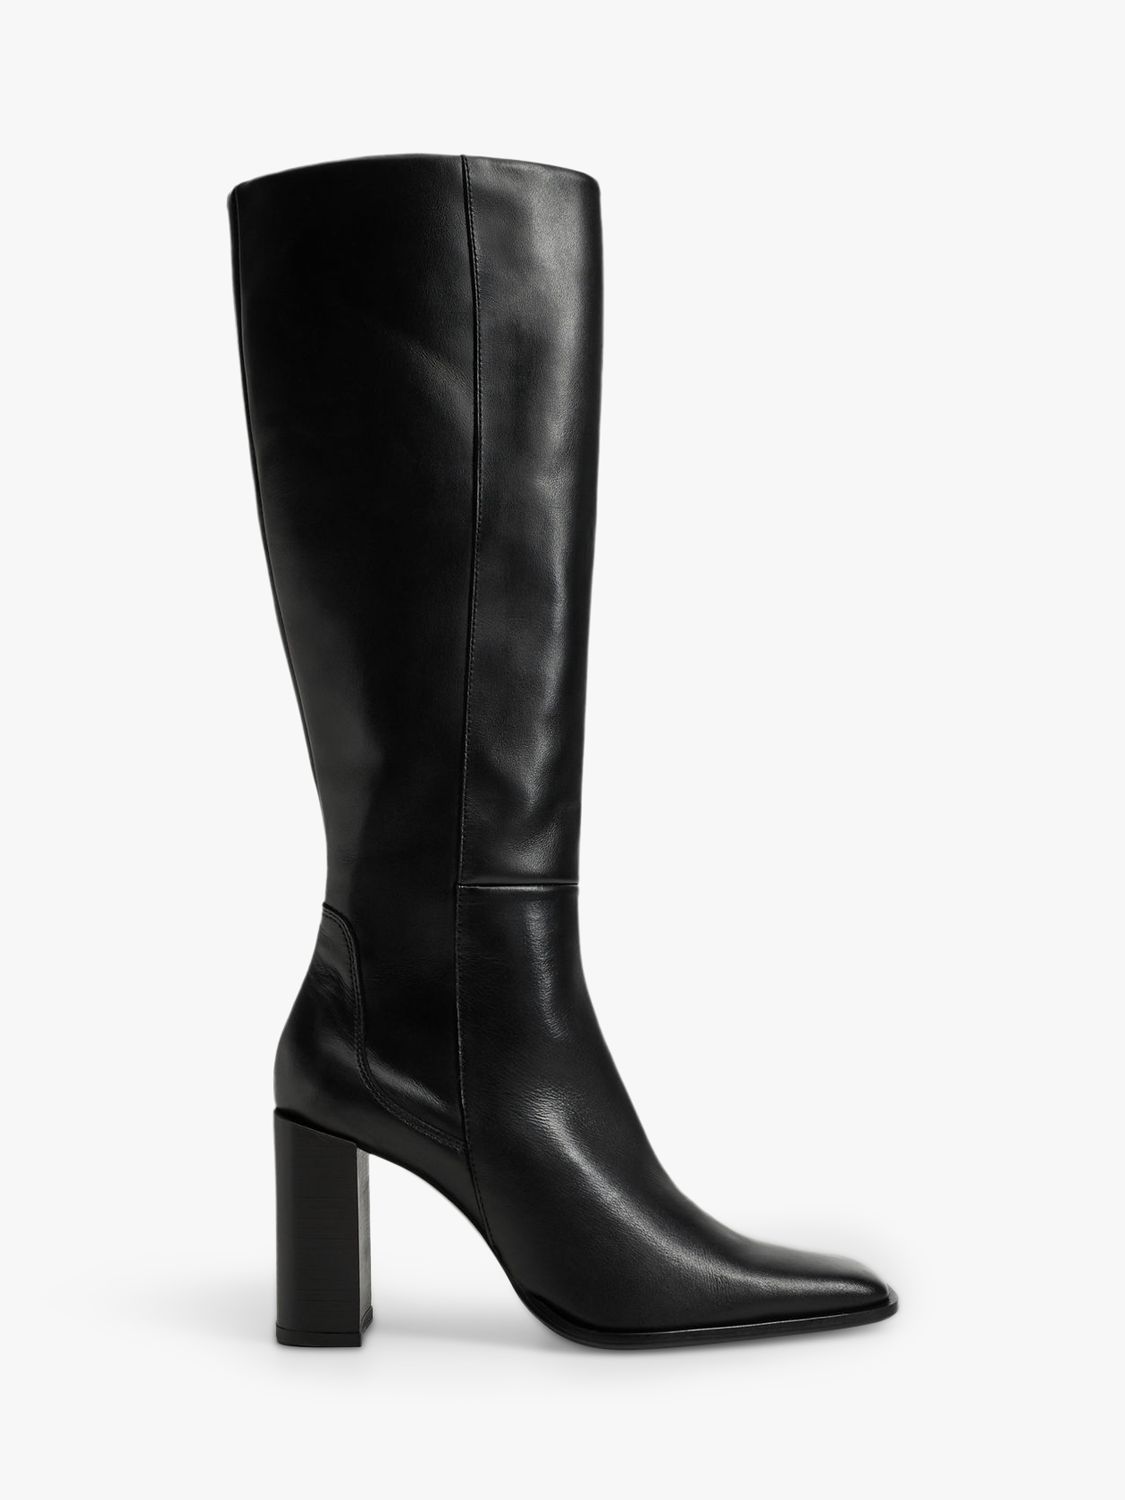 Mango Sofi Leather Knee High Boots, Black at John Lewis & Partners